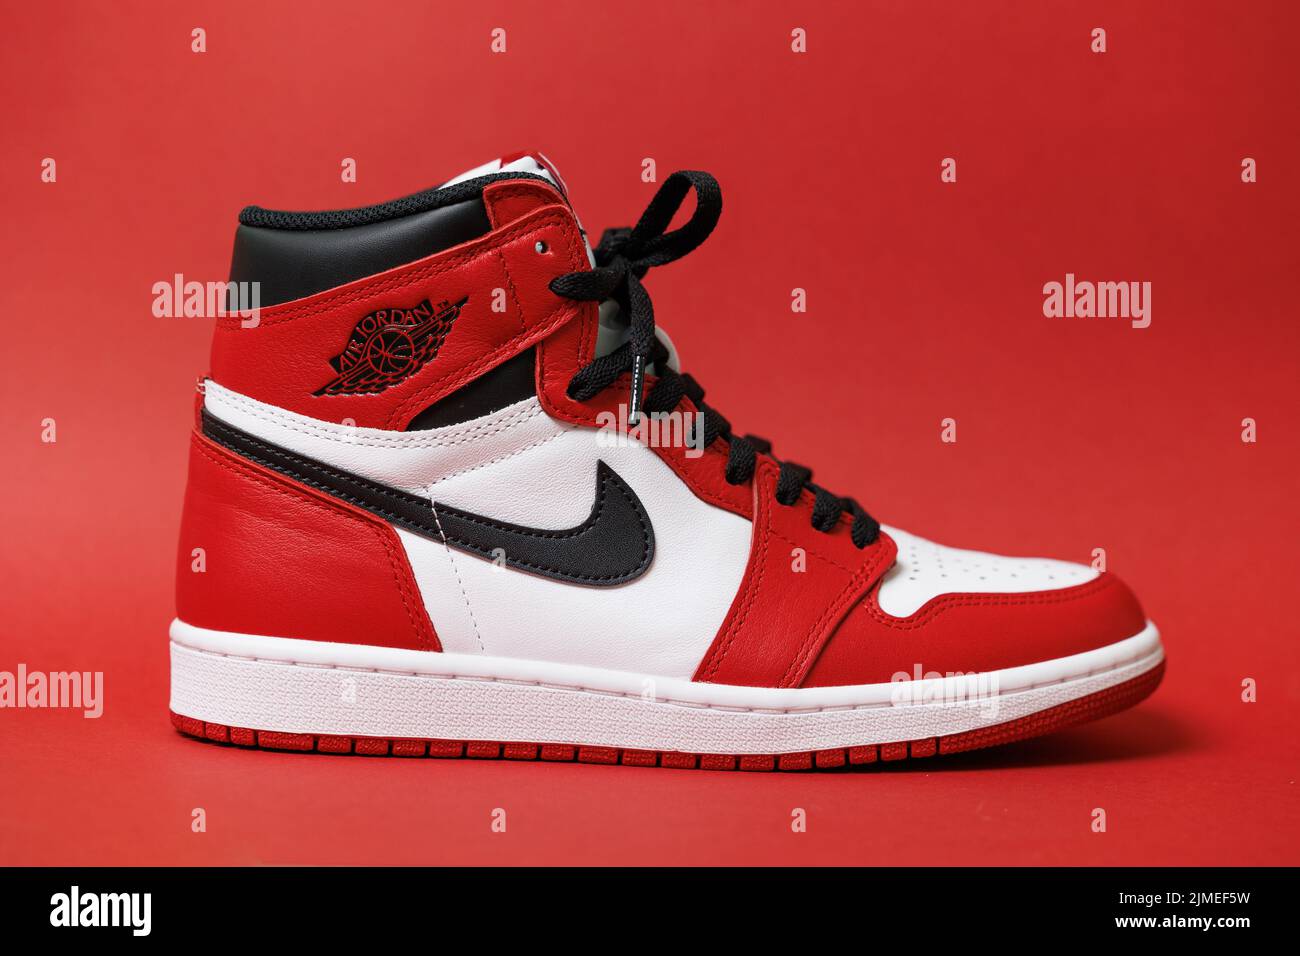 Nike air jordan 1 hi-res stock photography and images - Alamy